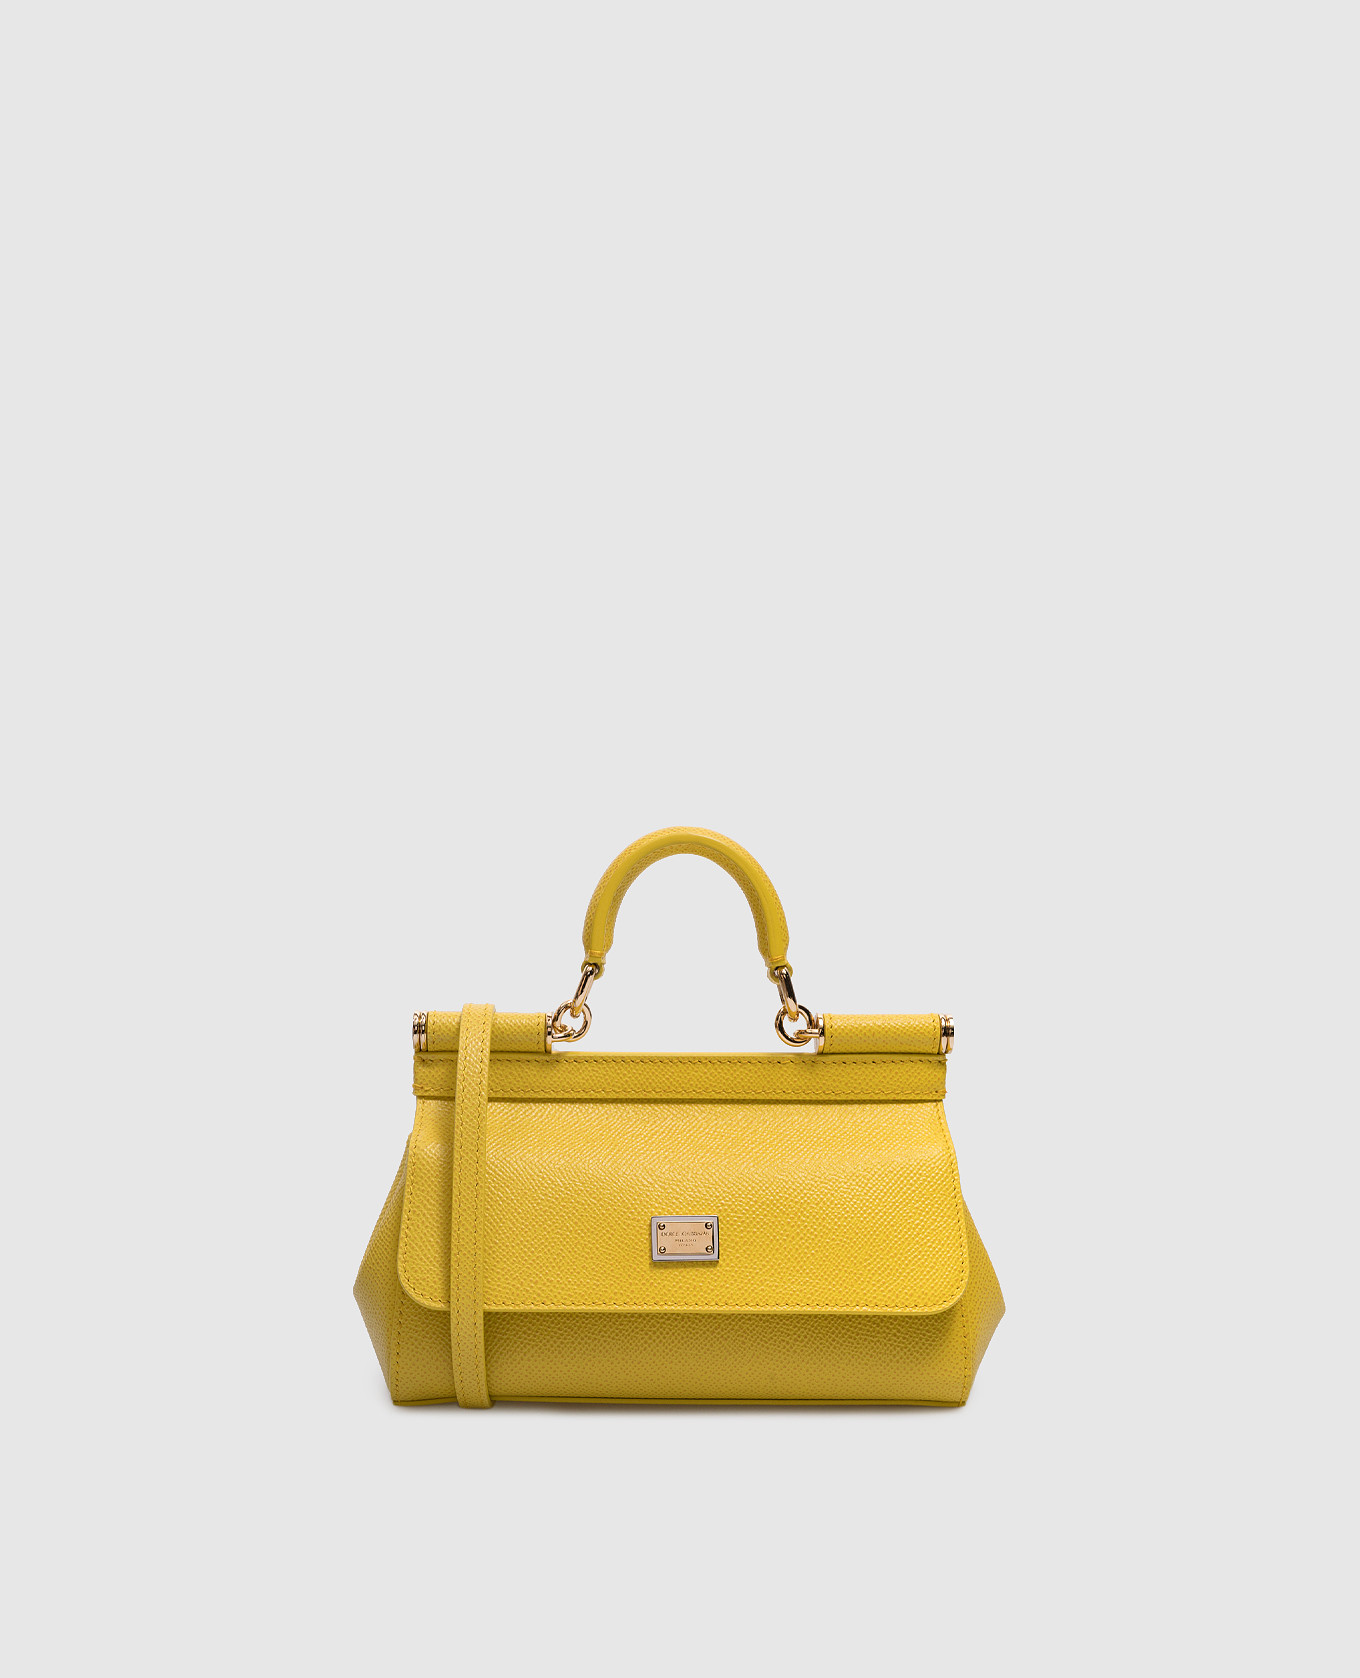 SICILY yellow leather mini bag with metal logo